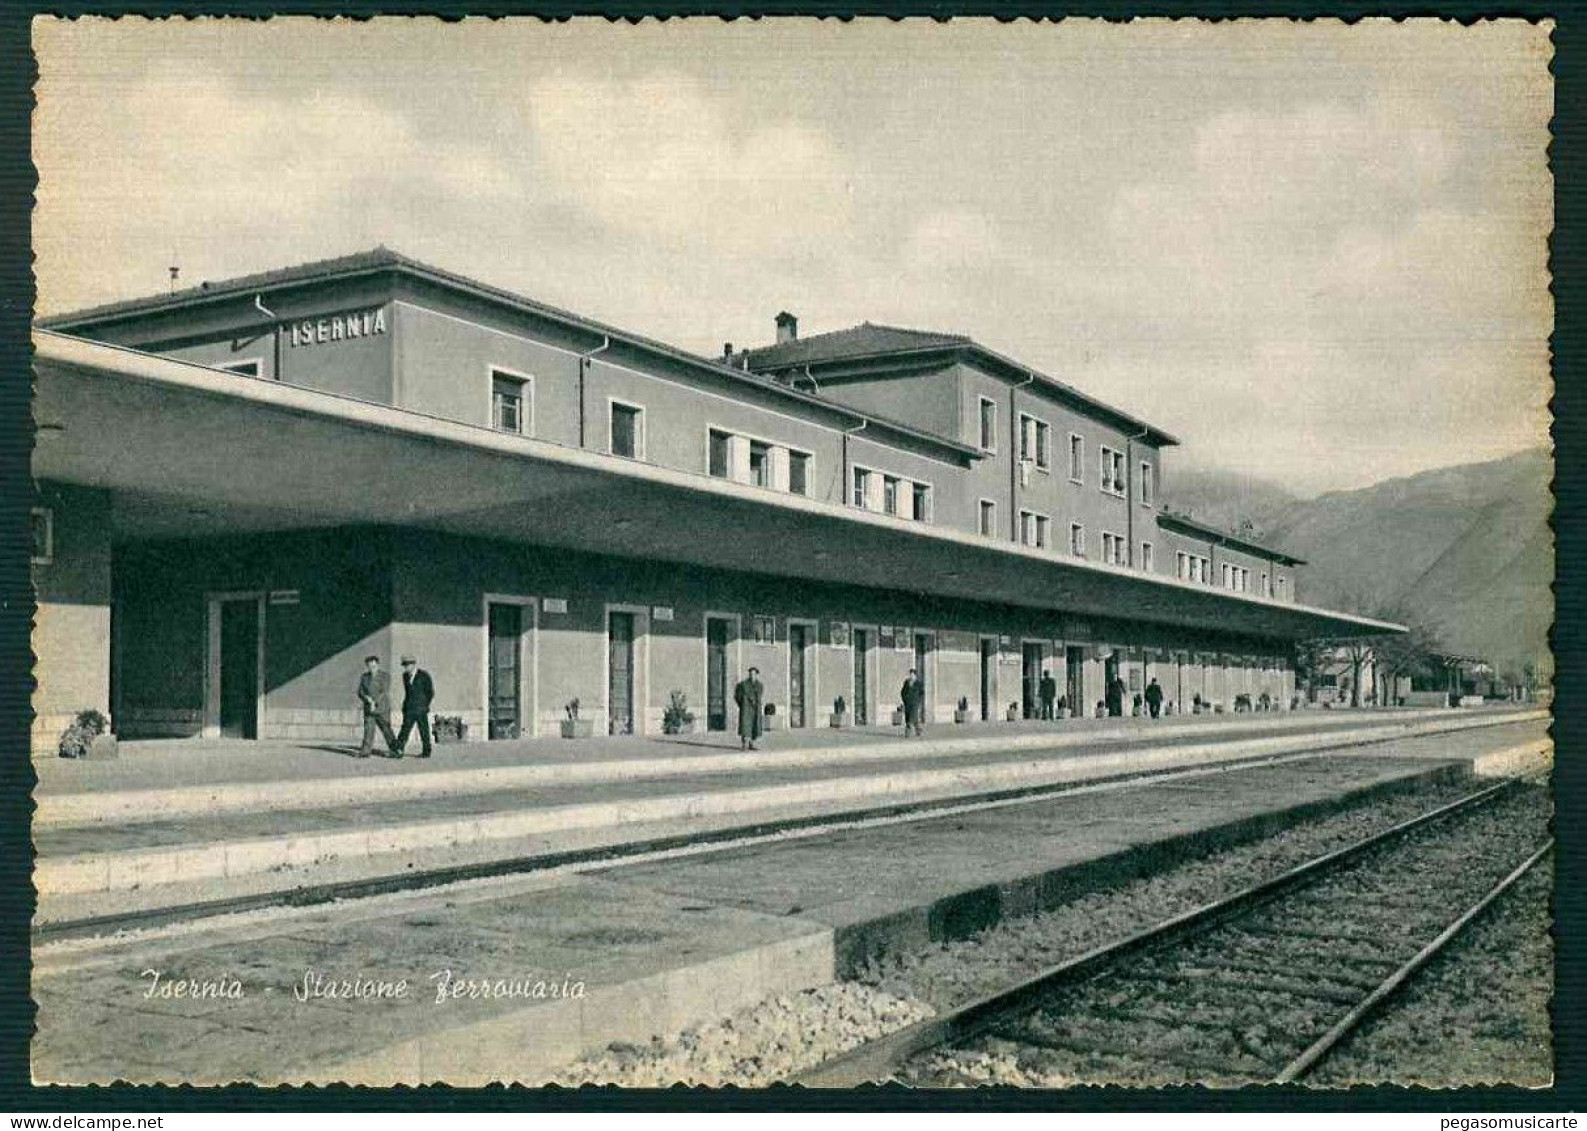 VZ011 - ISERNIA - STAZIONE FERROVIARIA - RAILWAYS STATION - TRAIN 1950 CIRCA - Isernia